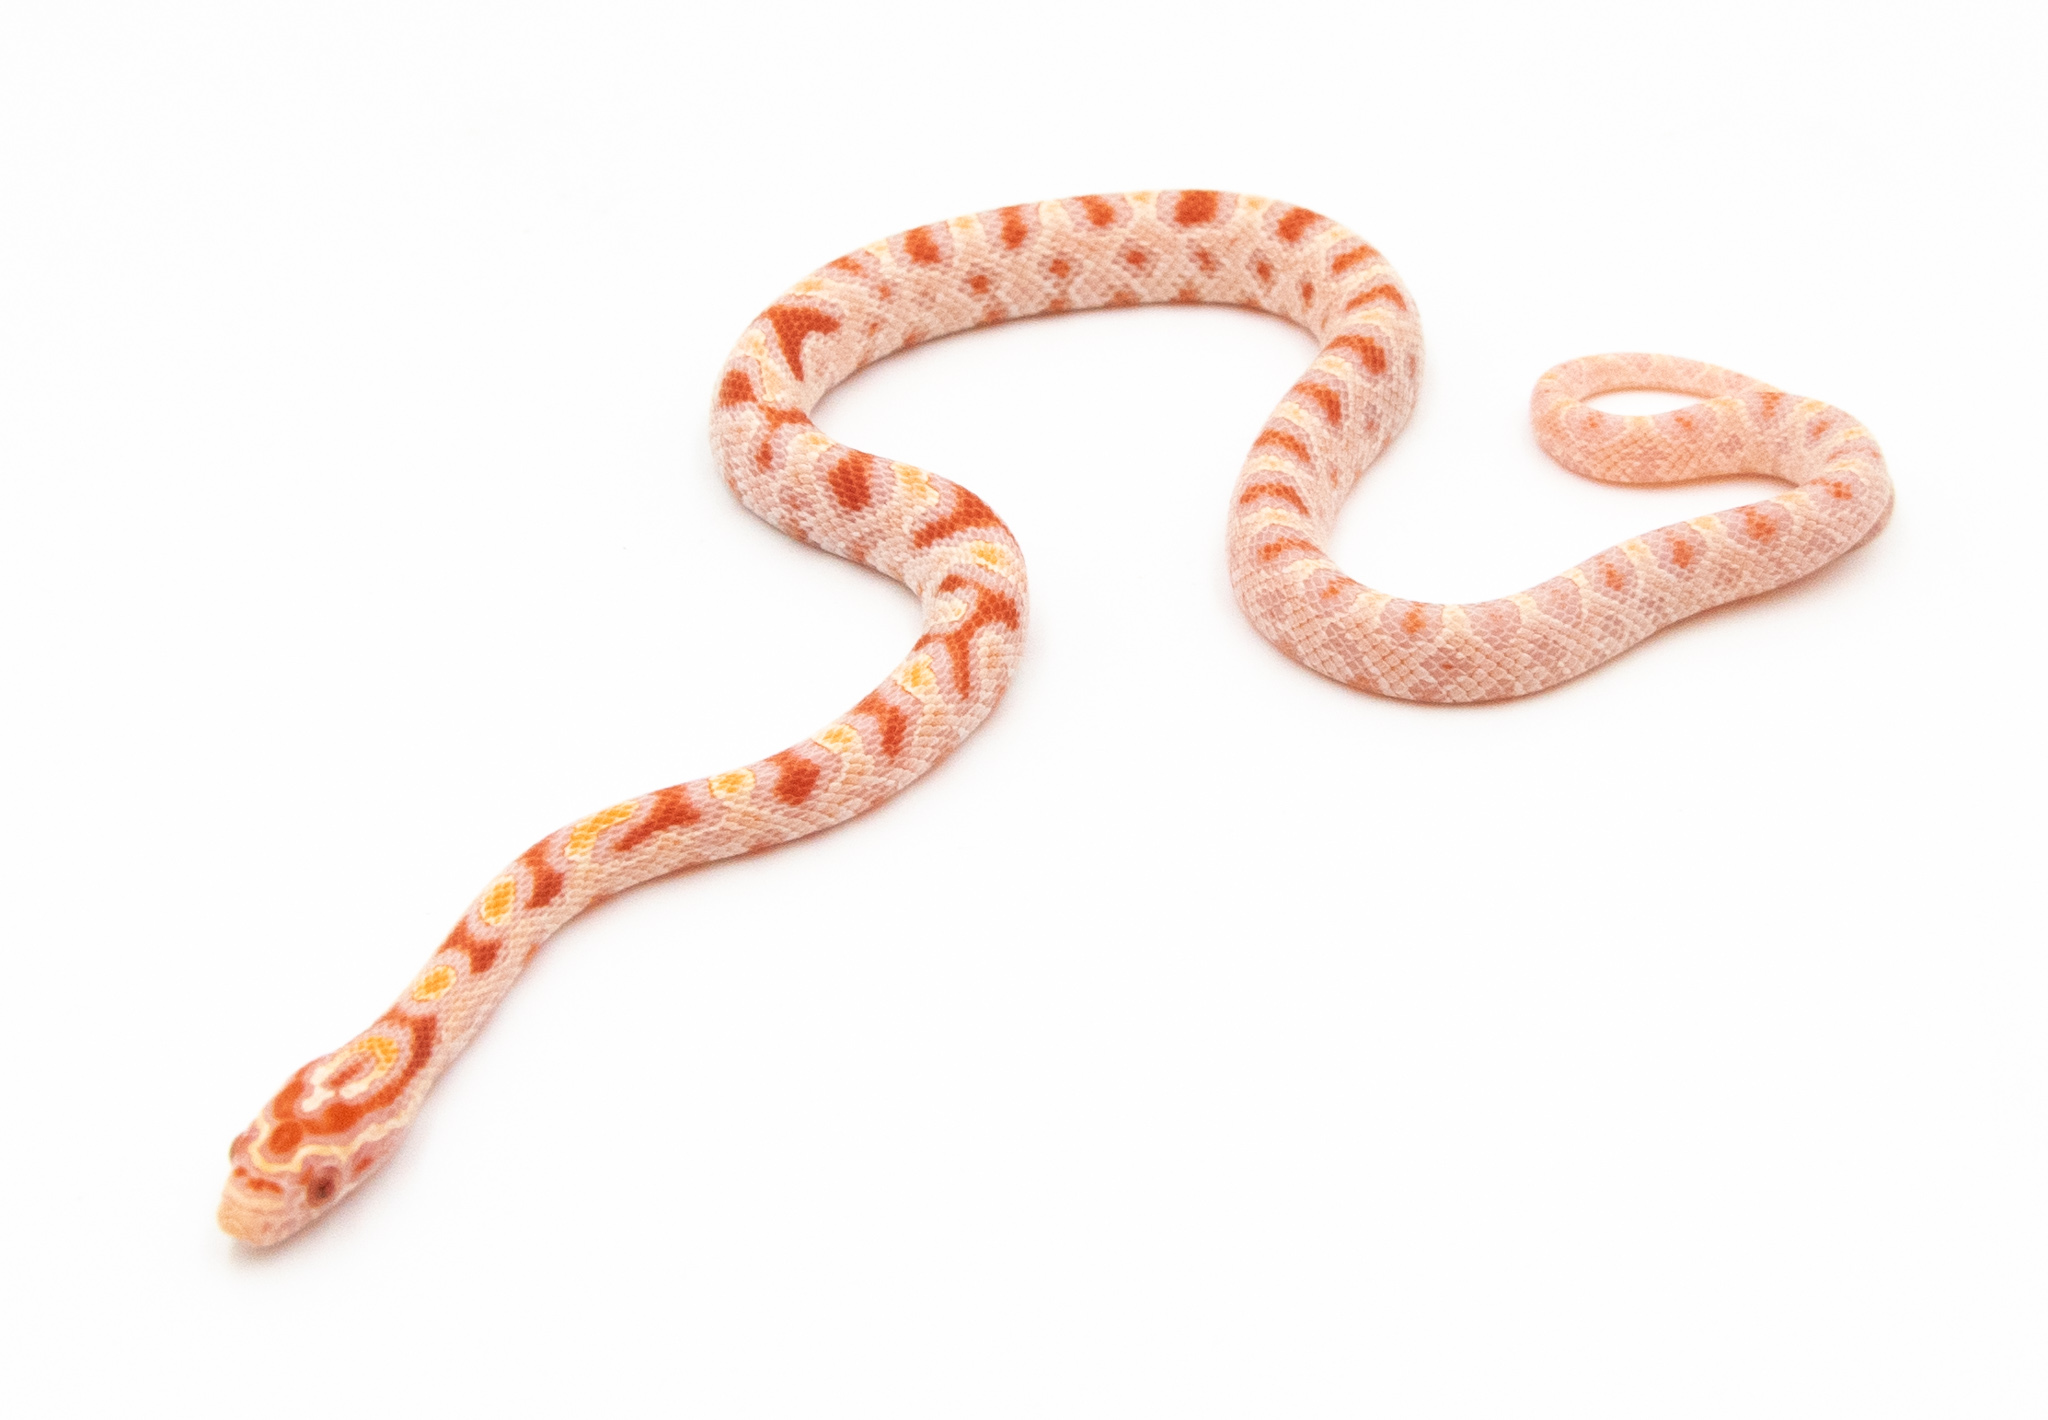 Serpent des blés - Pantherophis guttatus Okeetee Reverse Albinos